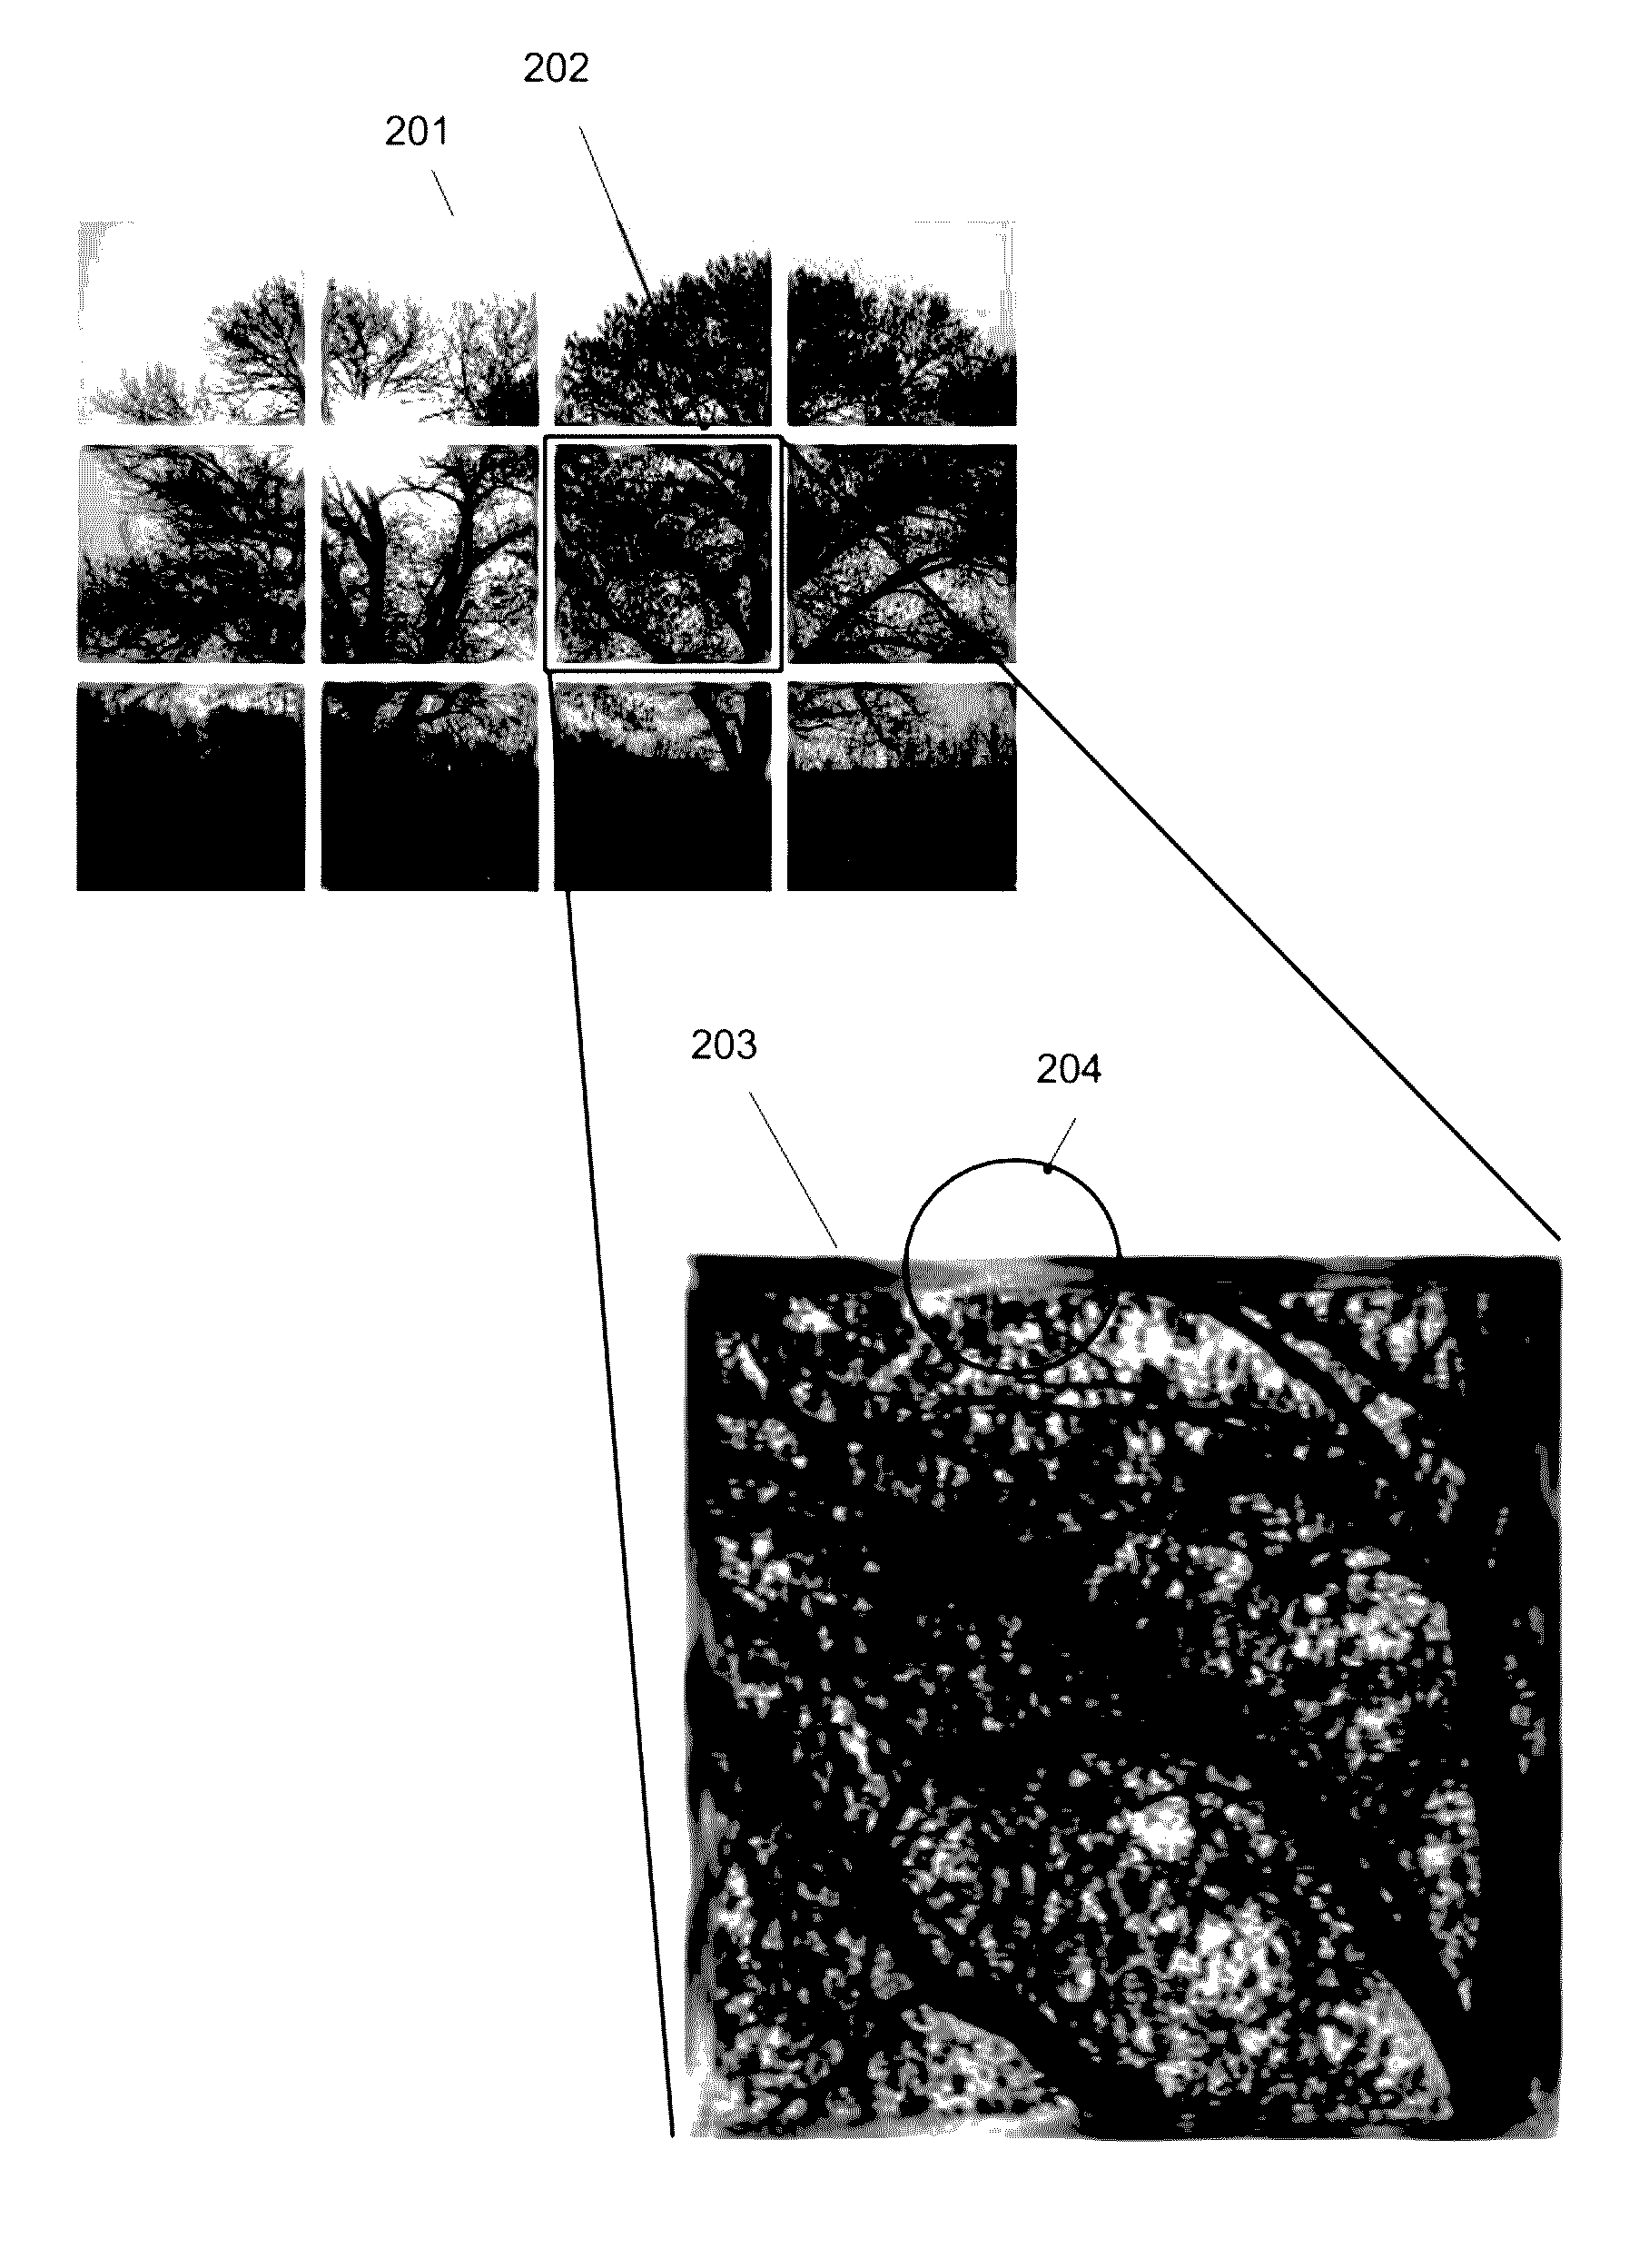 Image based tile puzzle CAPTCHA system